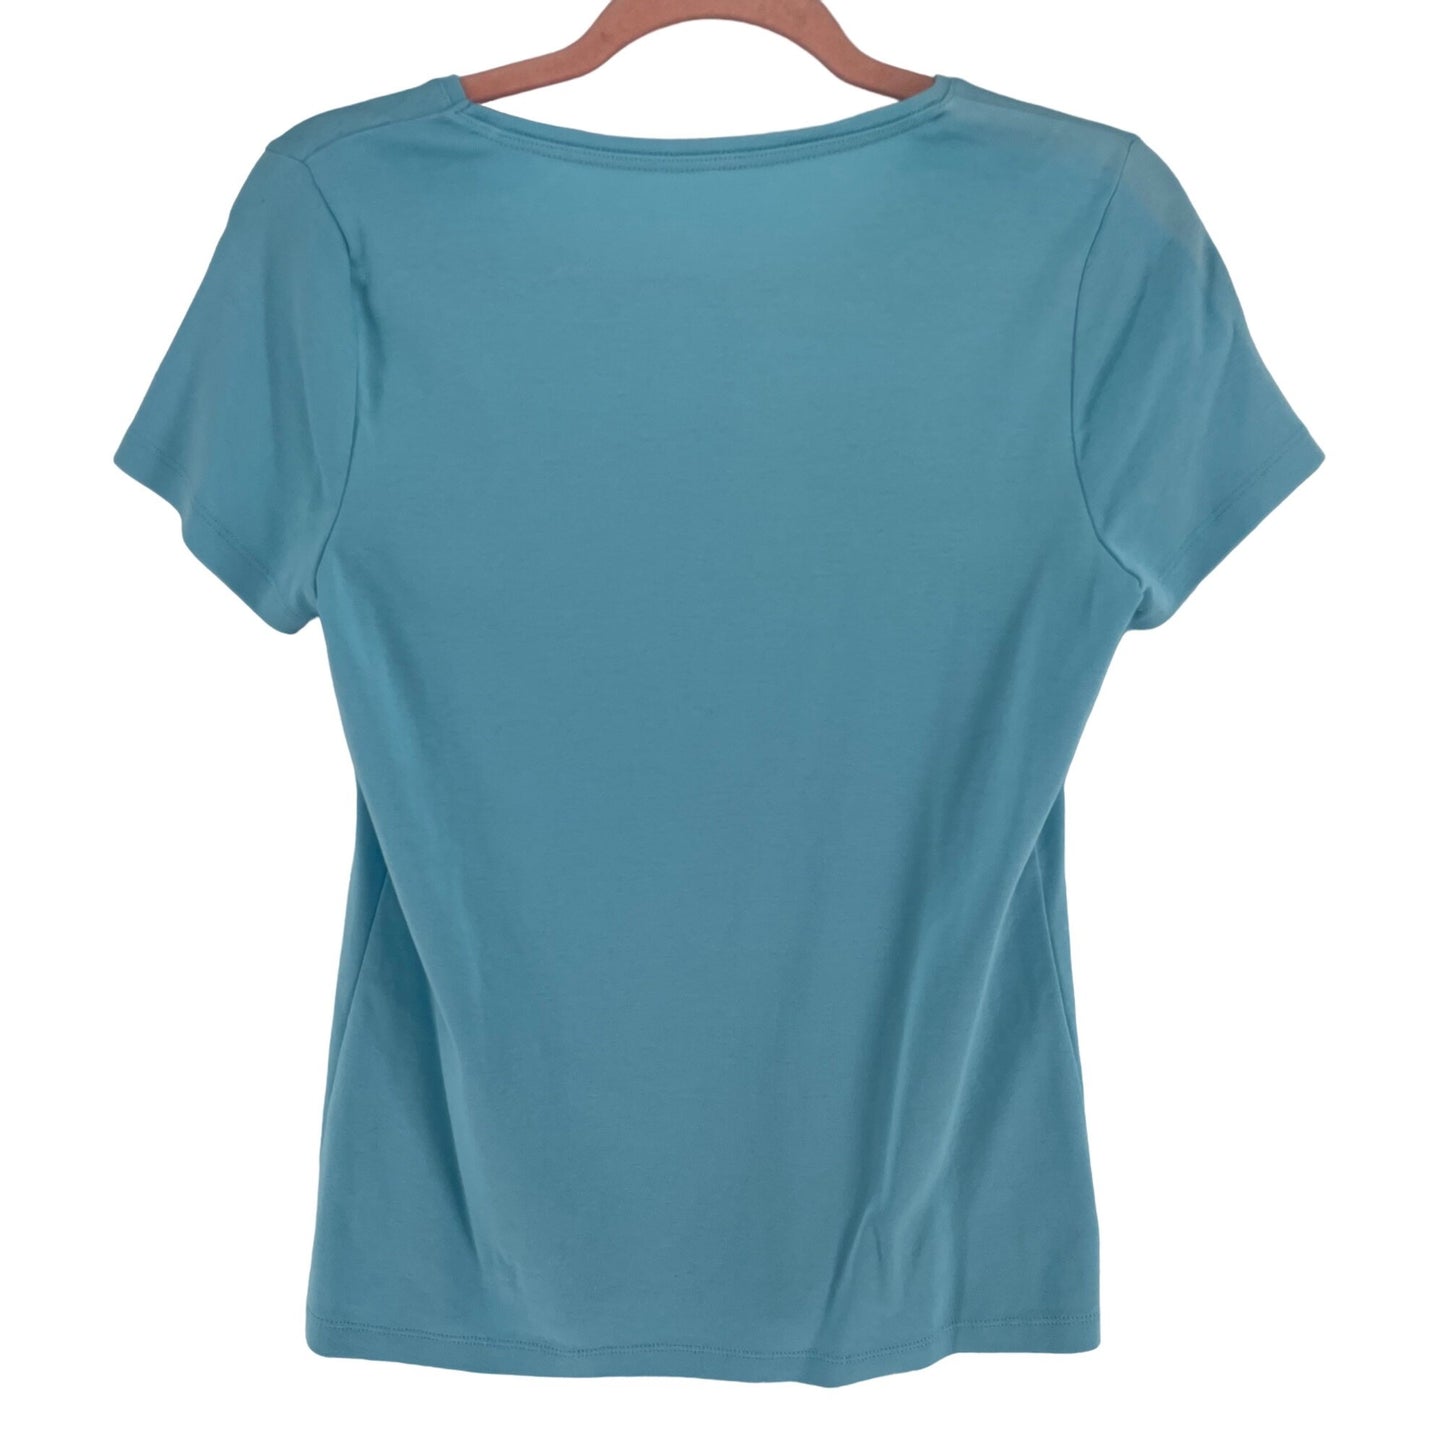 St. John's Bay Women's Size Medium Aqua Blue Crew Neck T-Shirt